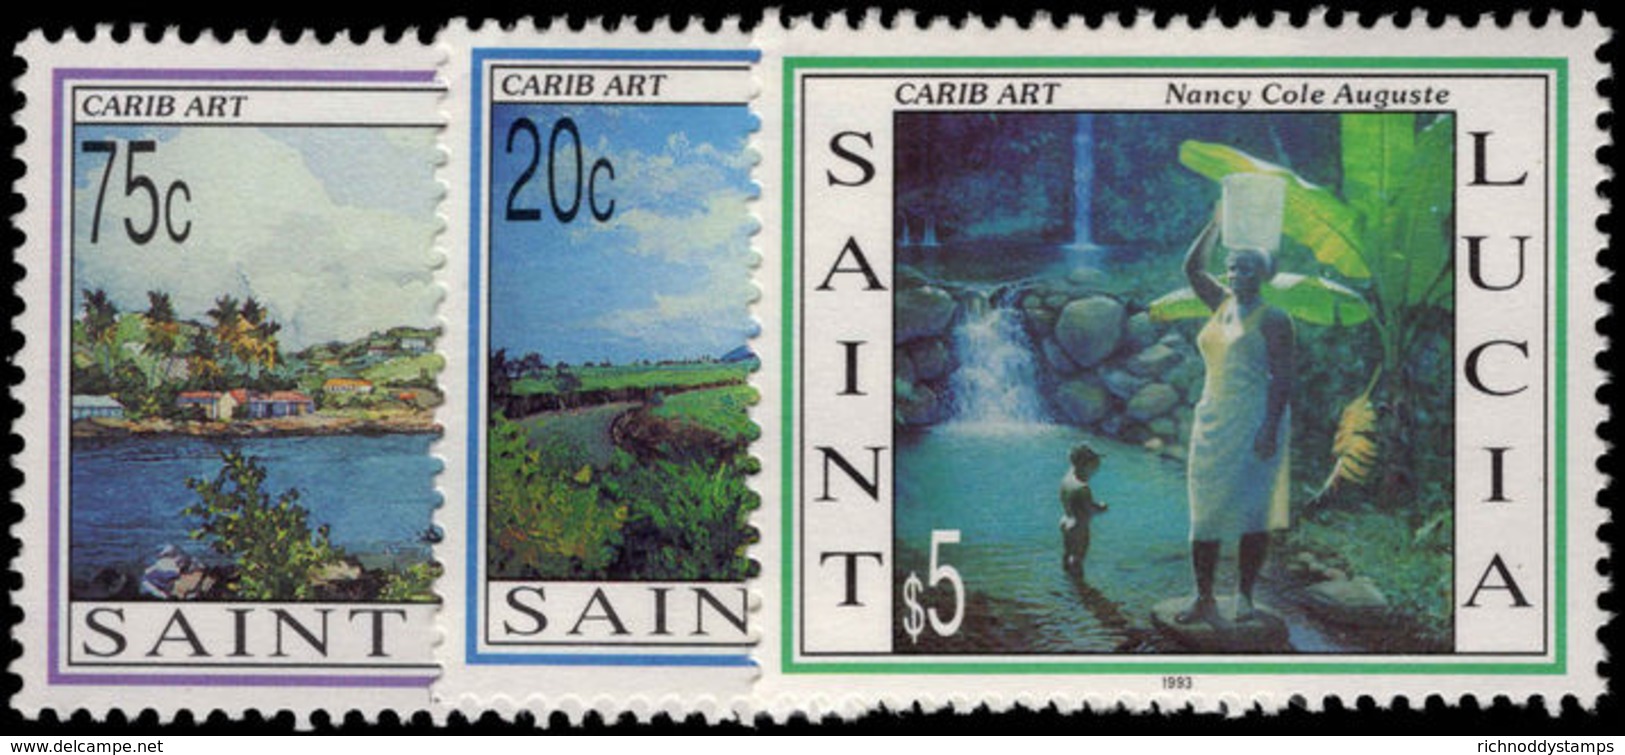 St Lucia 1993 Carib Art Unmounted Mint. - St.Lucia (1979-...)